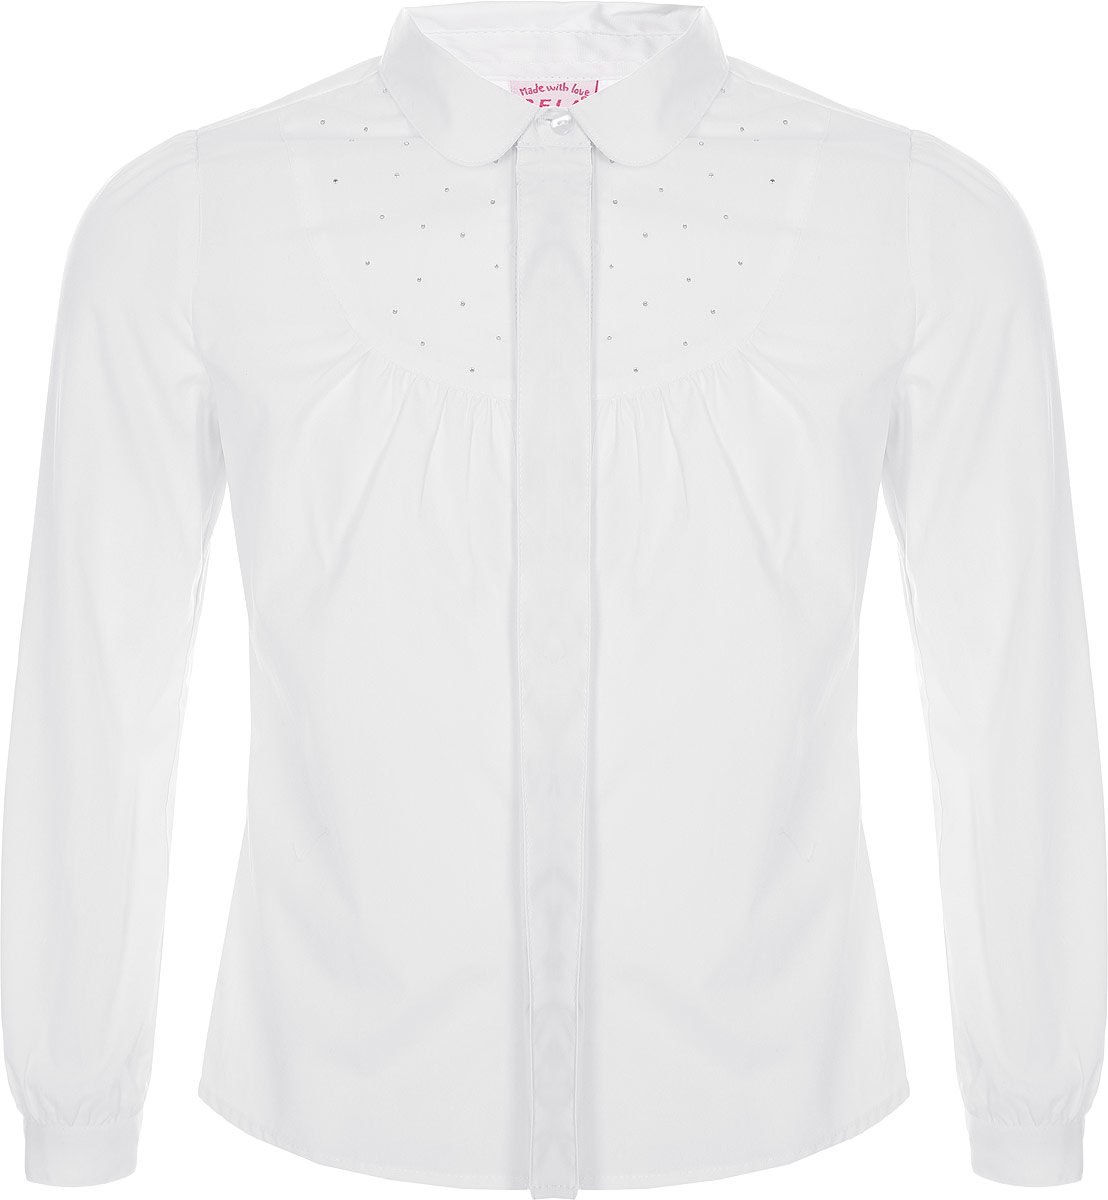 Блузка для девочки Sela, цвет: белый. B-612/1008-8310. Размер 164